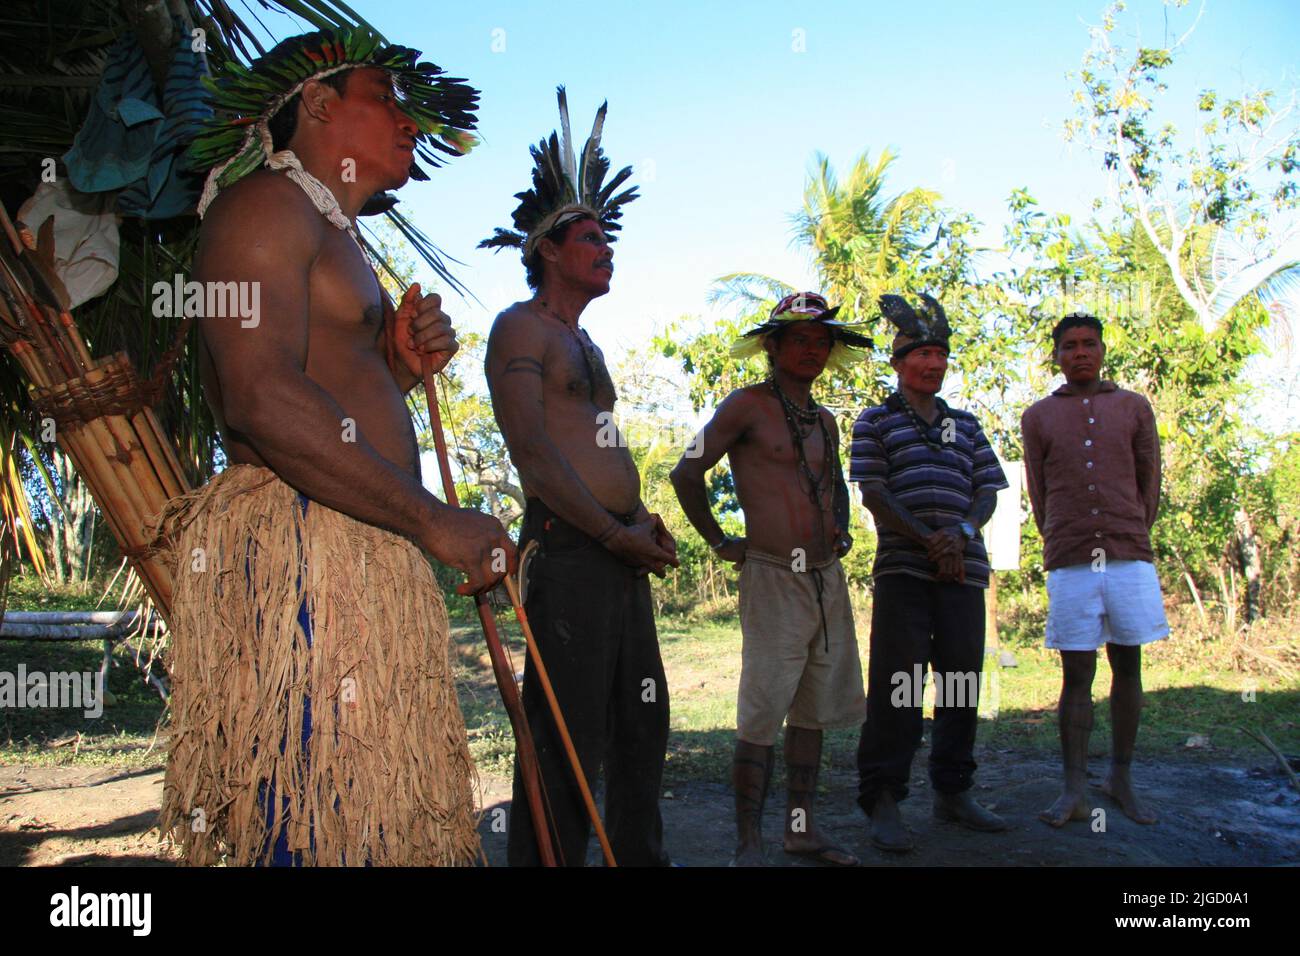 Íprado, bahia, brazil - july 8, 2008: pataxos indians from the Cahi village in the Prado region in southern Bahia. Stock Photo